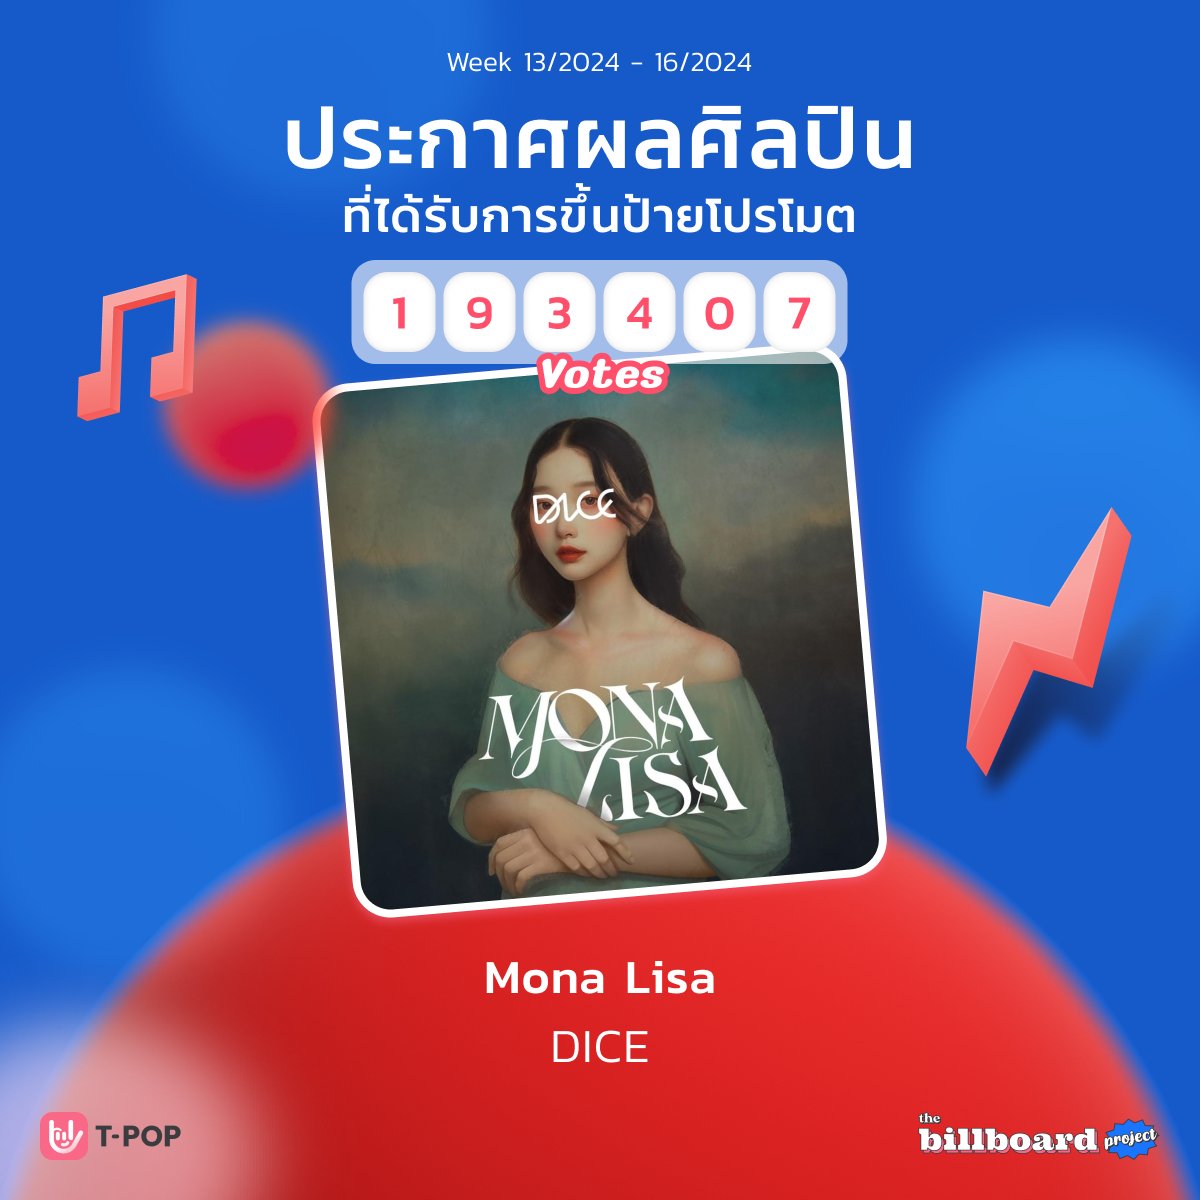 ♡⸝⸝ ᴄᴏɴɢʀᴀᴛᴜʟᴀᴛɪᴏɴꜱ @DICE_SONRAY 
.
ขอแสดงความยินดีกับเพลง Mona Lisa จาก DICE ด้วยคะแนนโหวตจาก POP Coins ทั้งสิ้น 193,407 โหวต
.
#DICE_SONRAY #DICE_MonaLisa_DebutSingle
#TPOP #TPOPApp